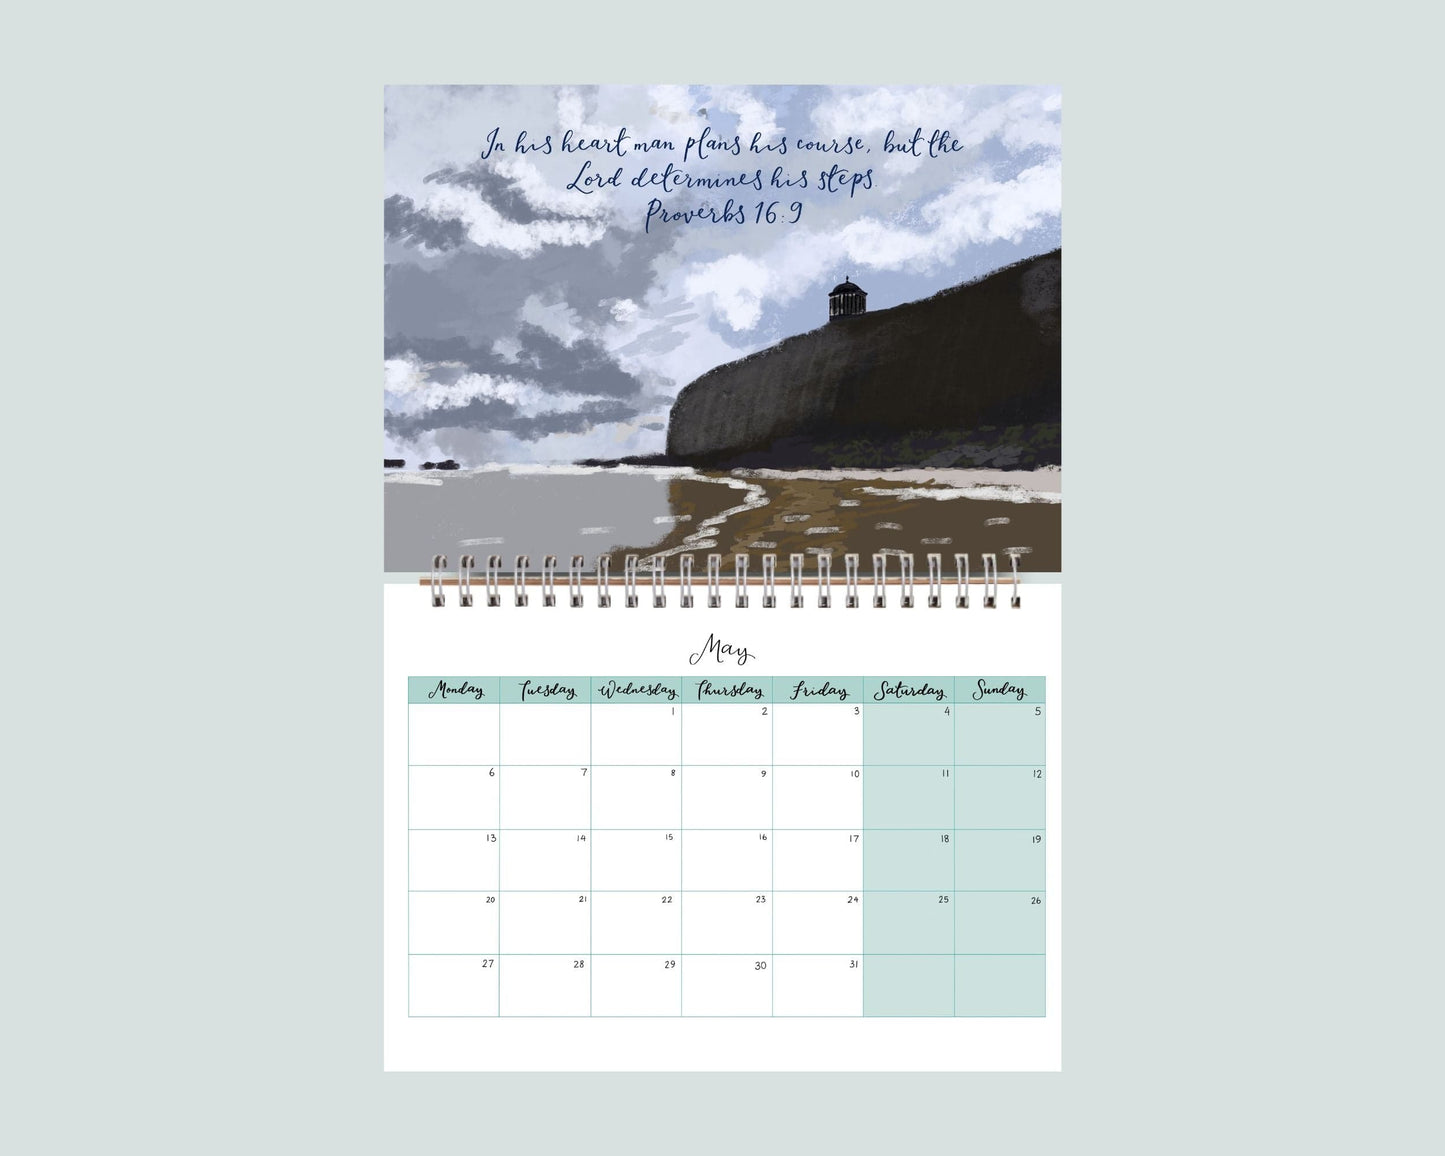 2025 Christian calendar Calendars, Organizers & Planners And Hope Designs   